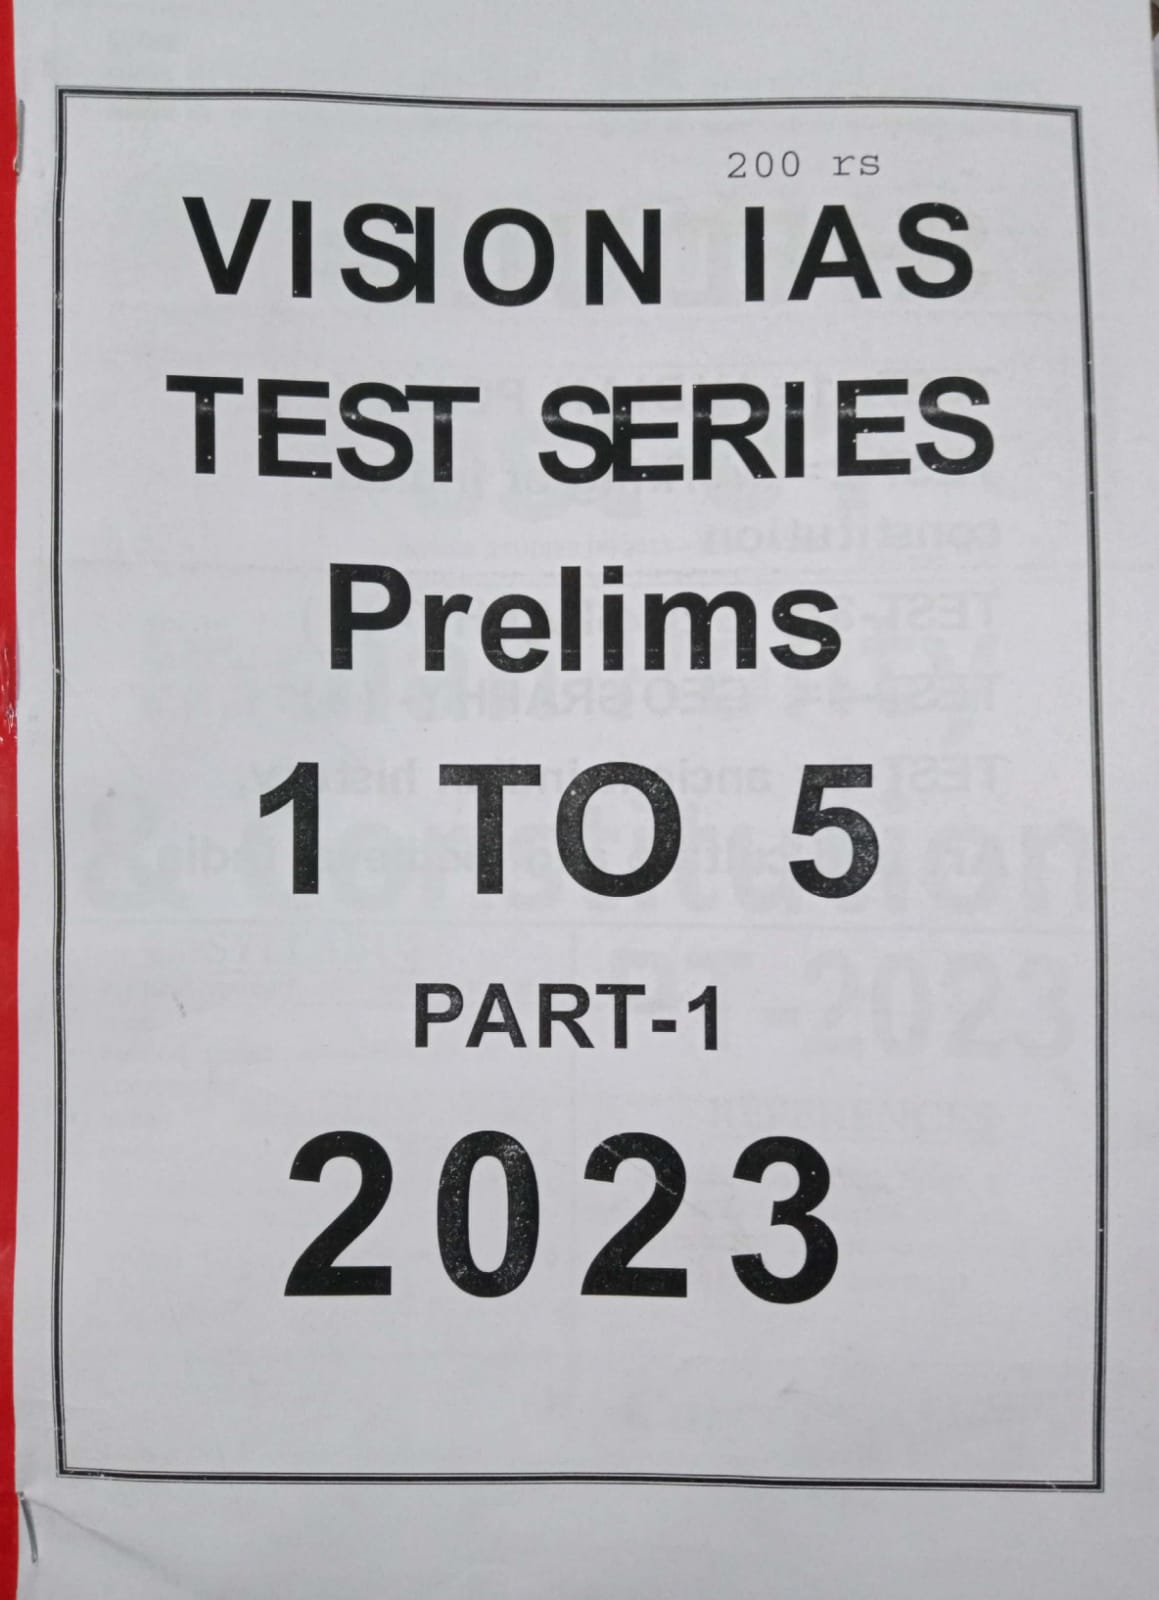 VISION IAS PRELIMS TEST SERIES 2023 PART -1 TEST NO 1 - TEST NO 5 [ENGLISH MEDIUM]